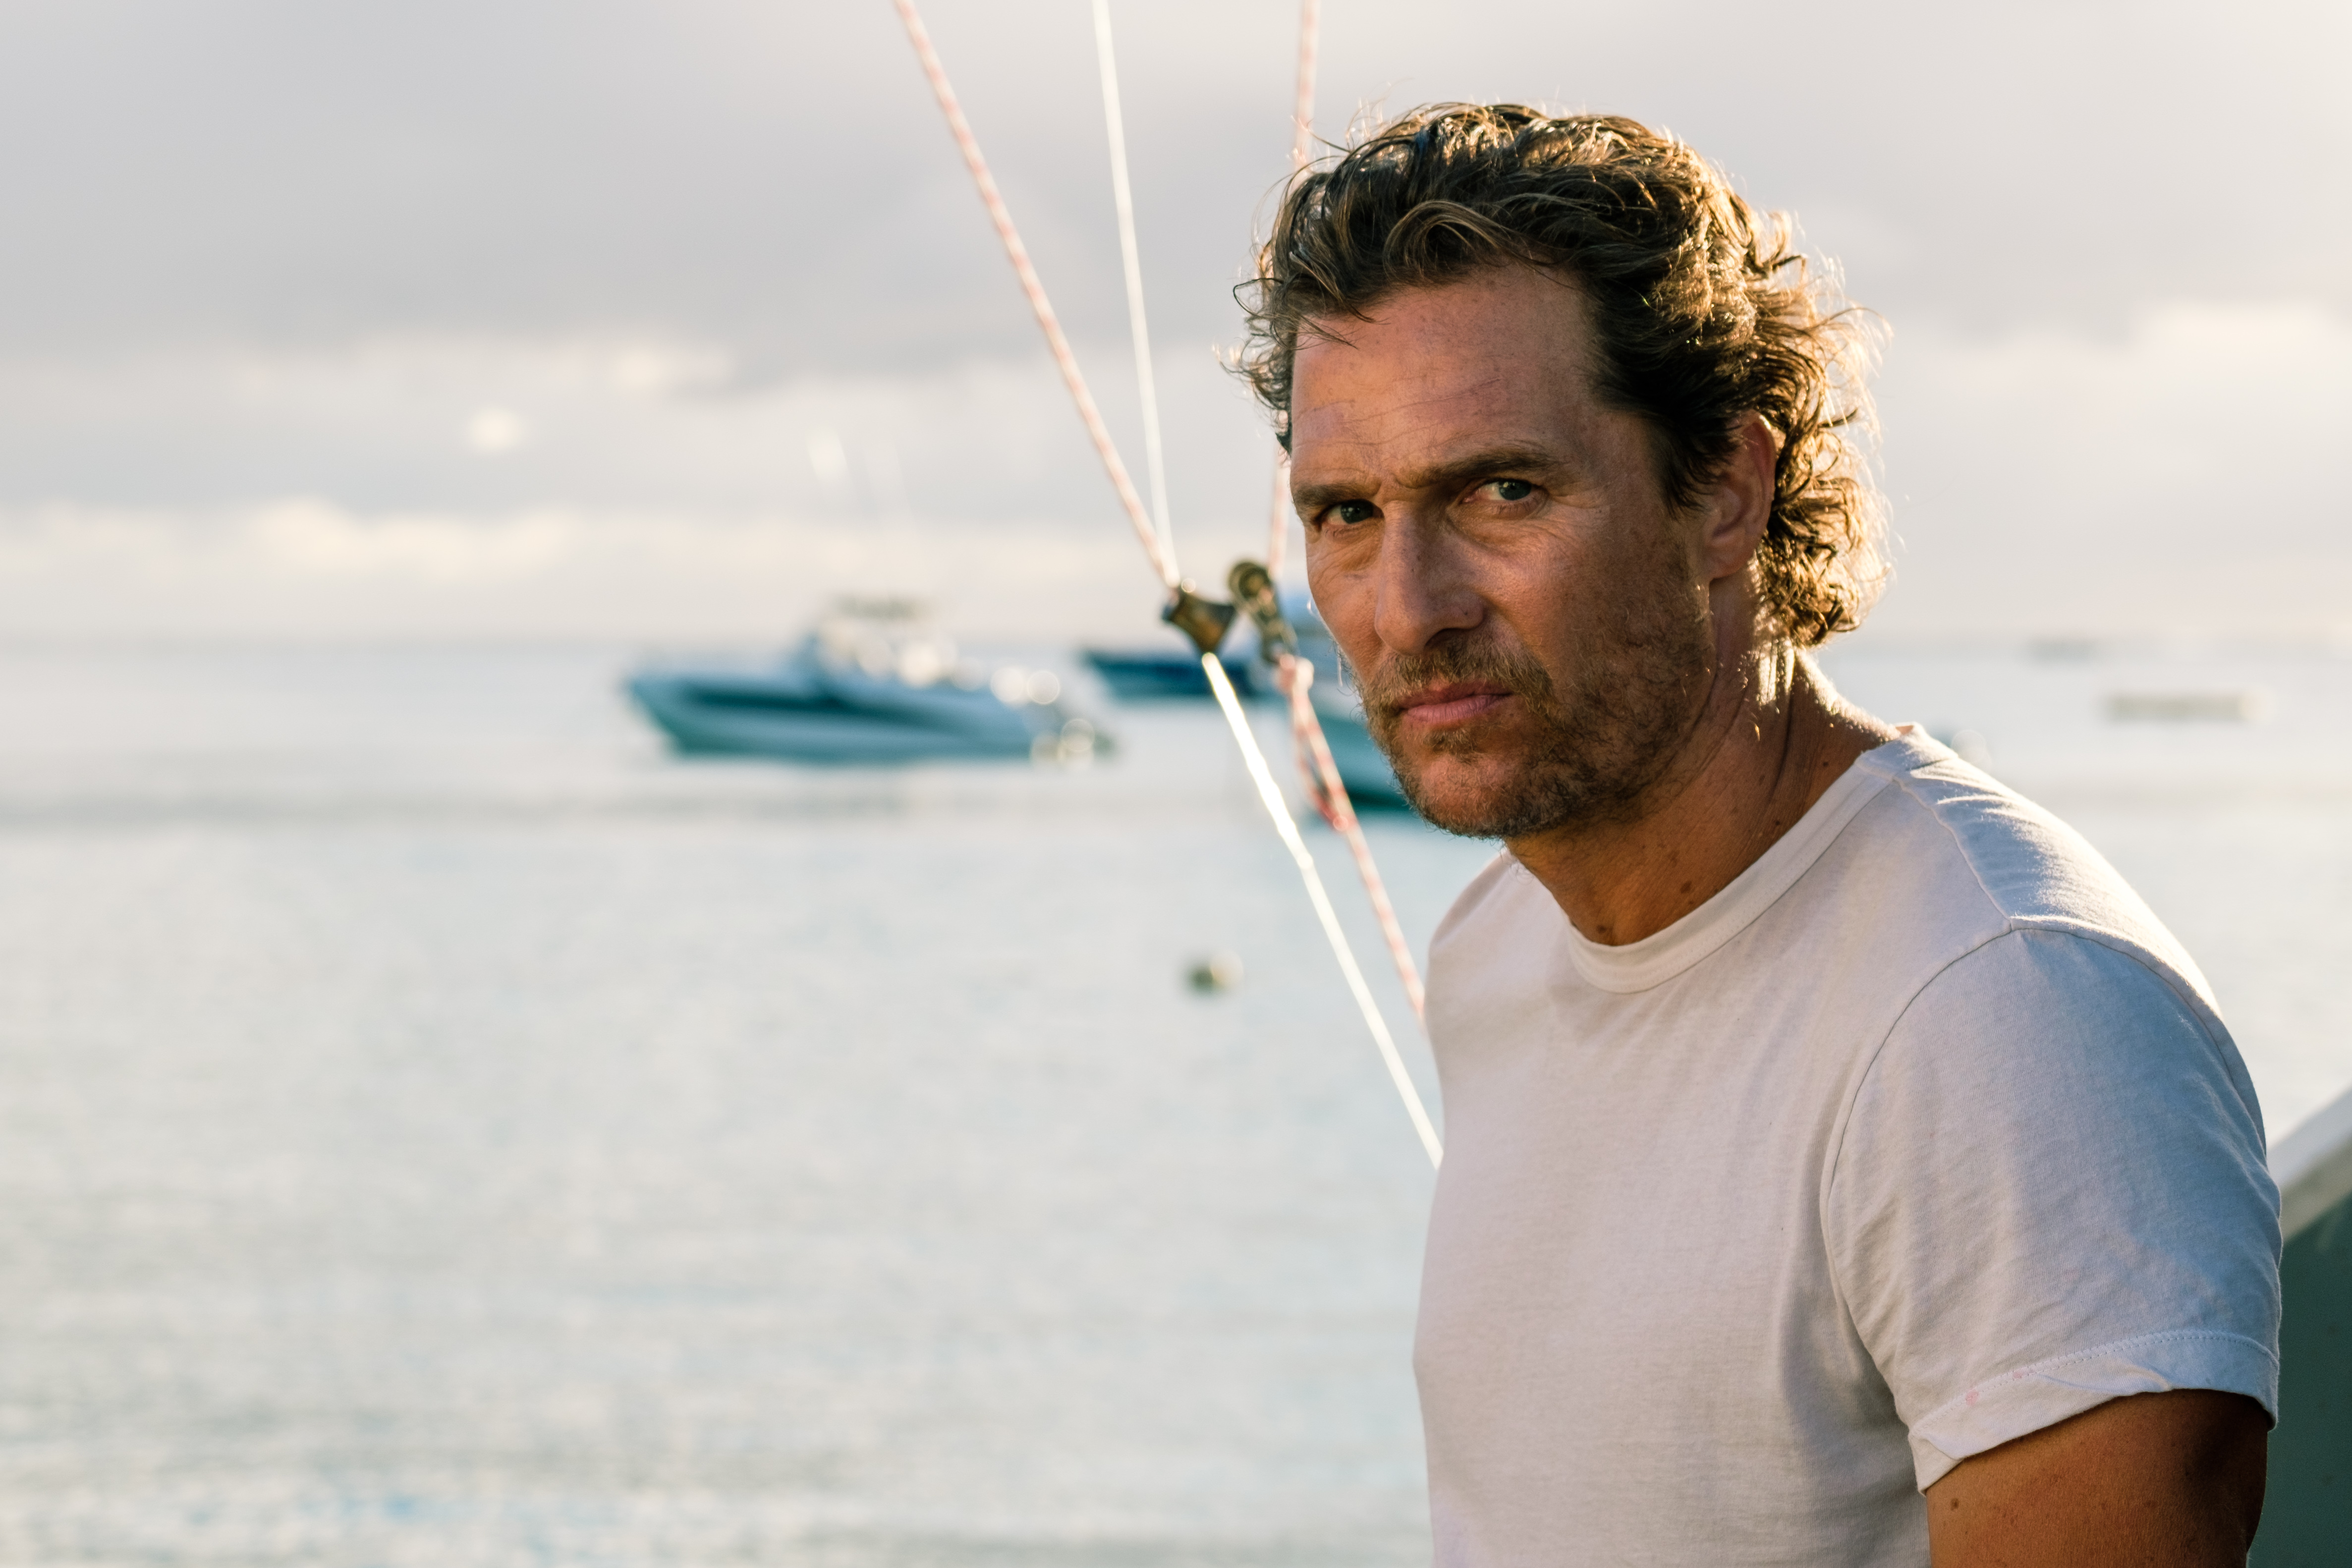 Matthew McConaughey in Serenity.